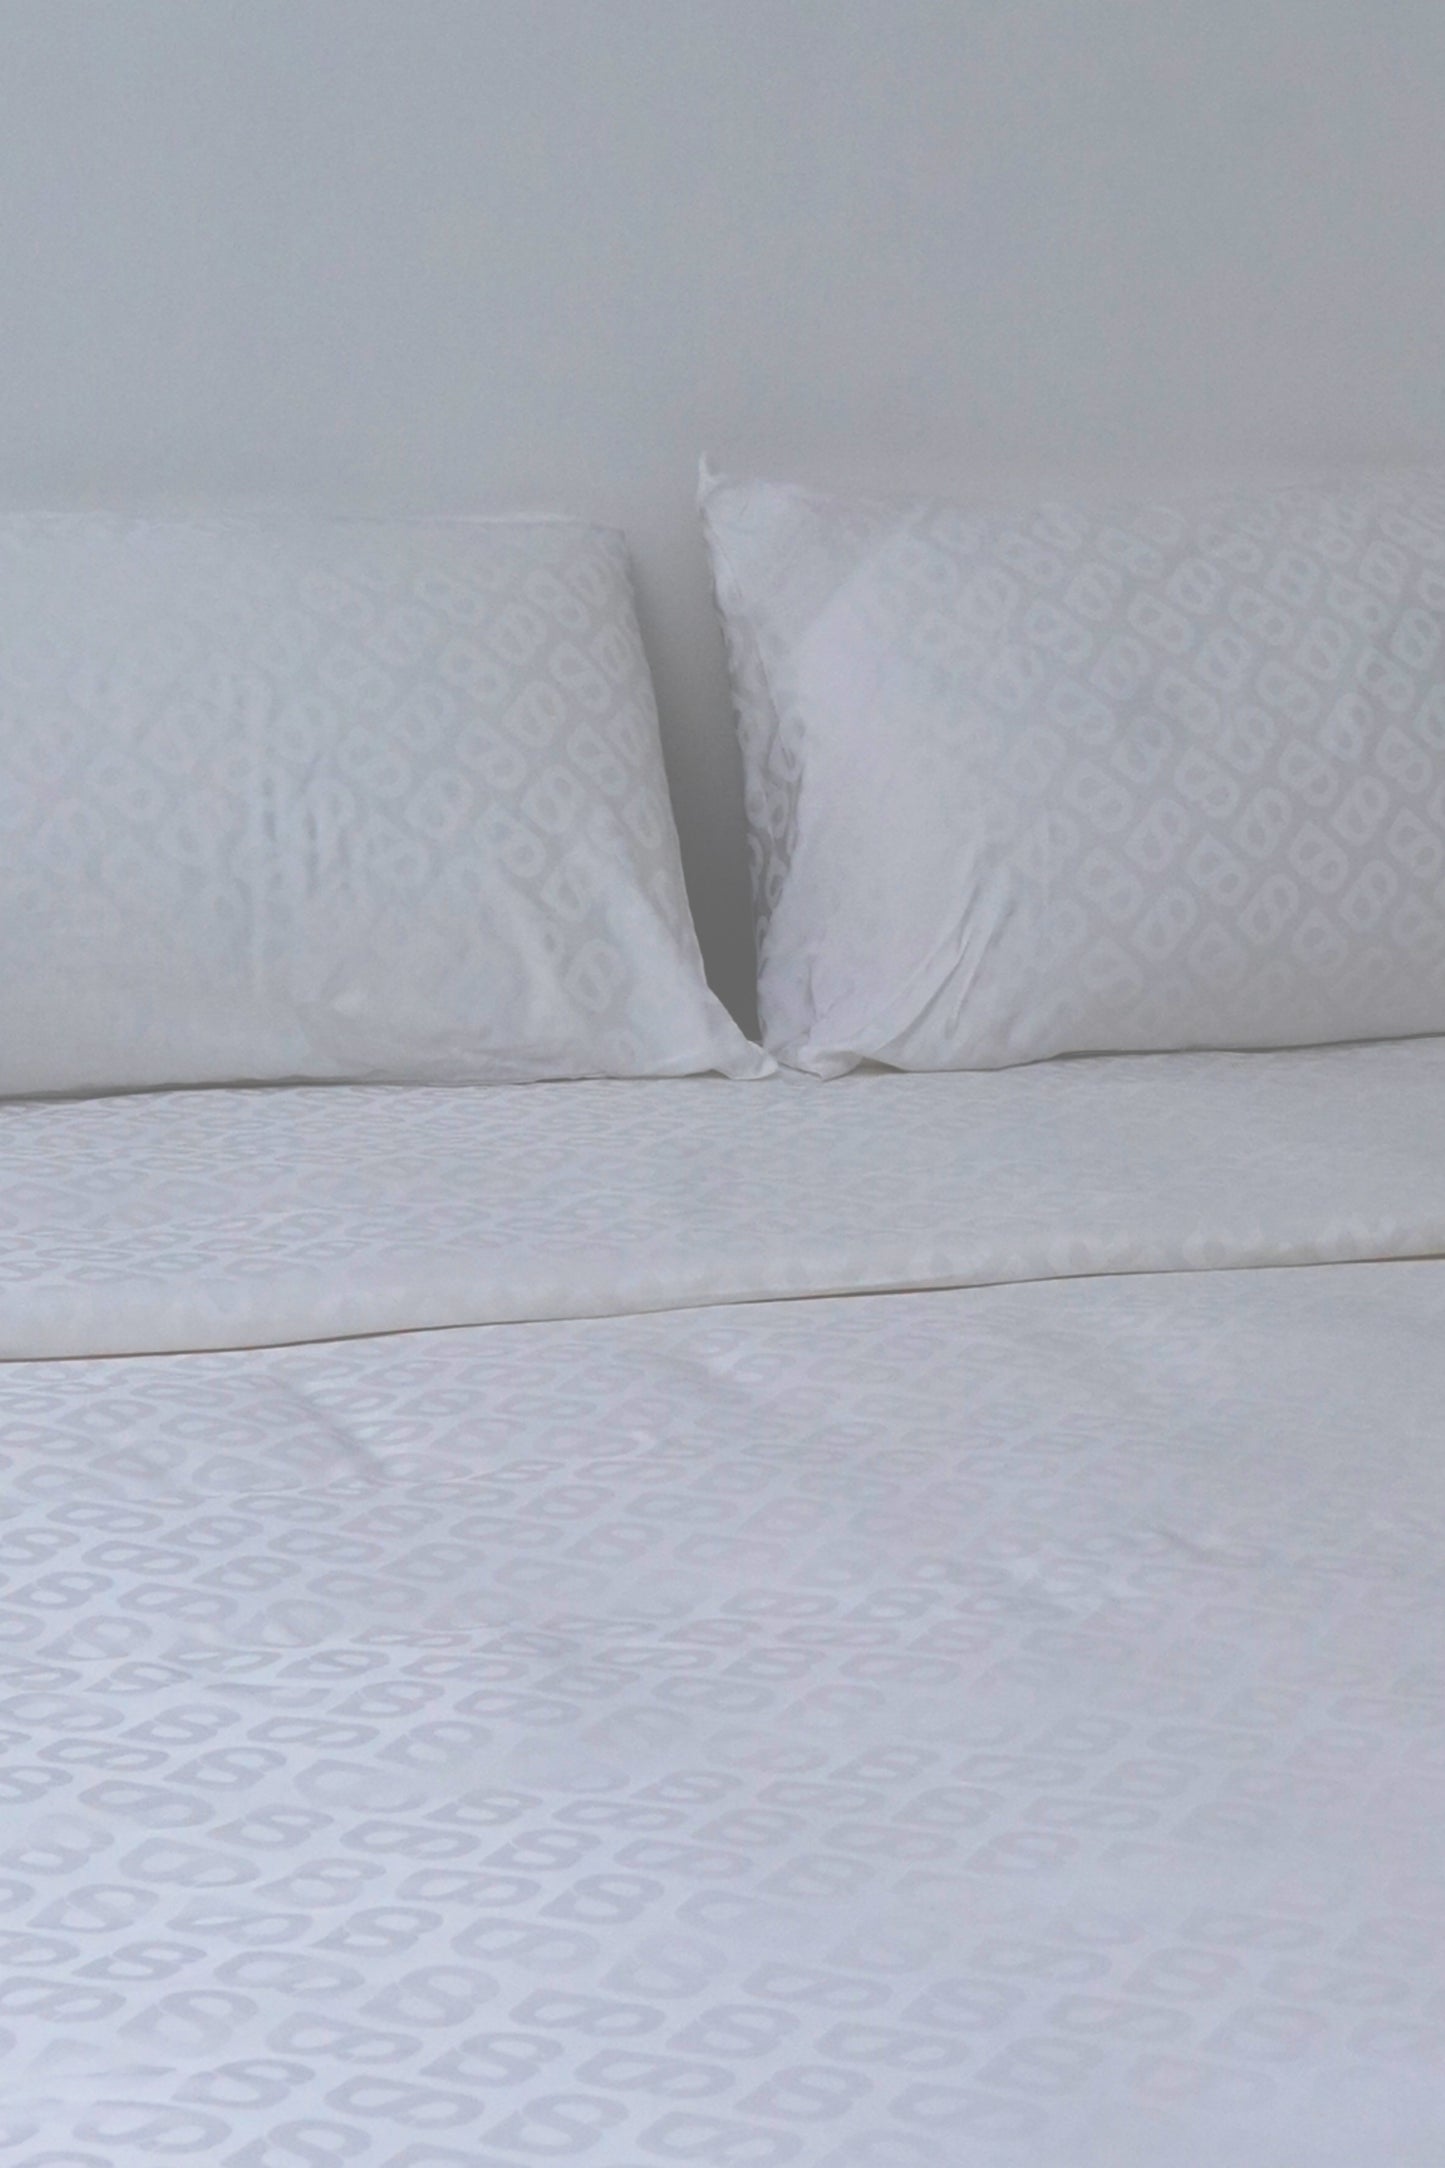 Signature Bed Sheet - Super White